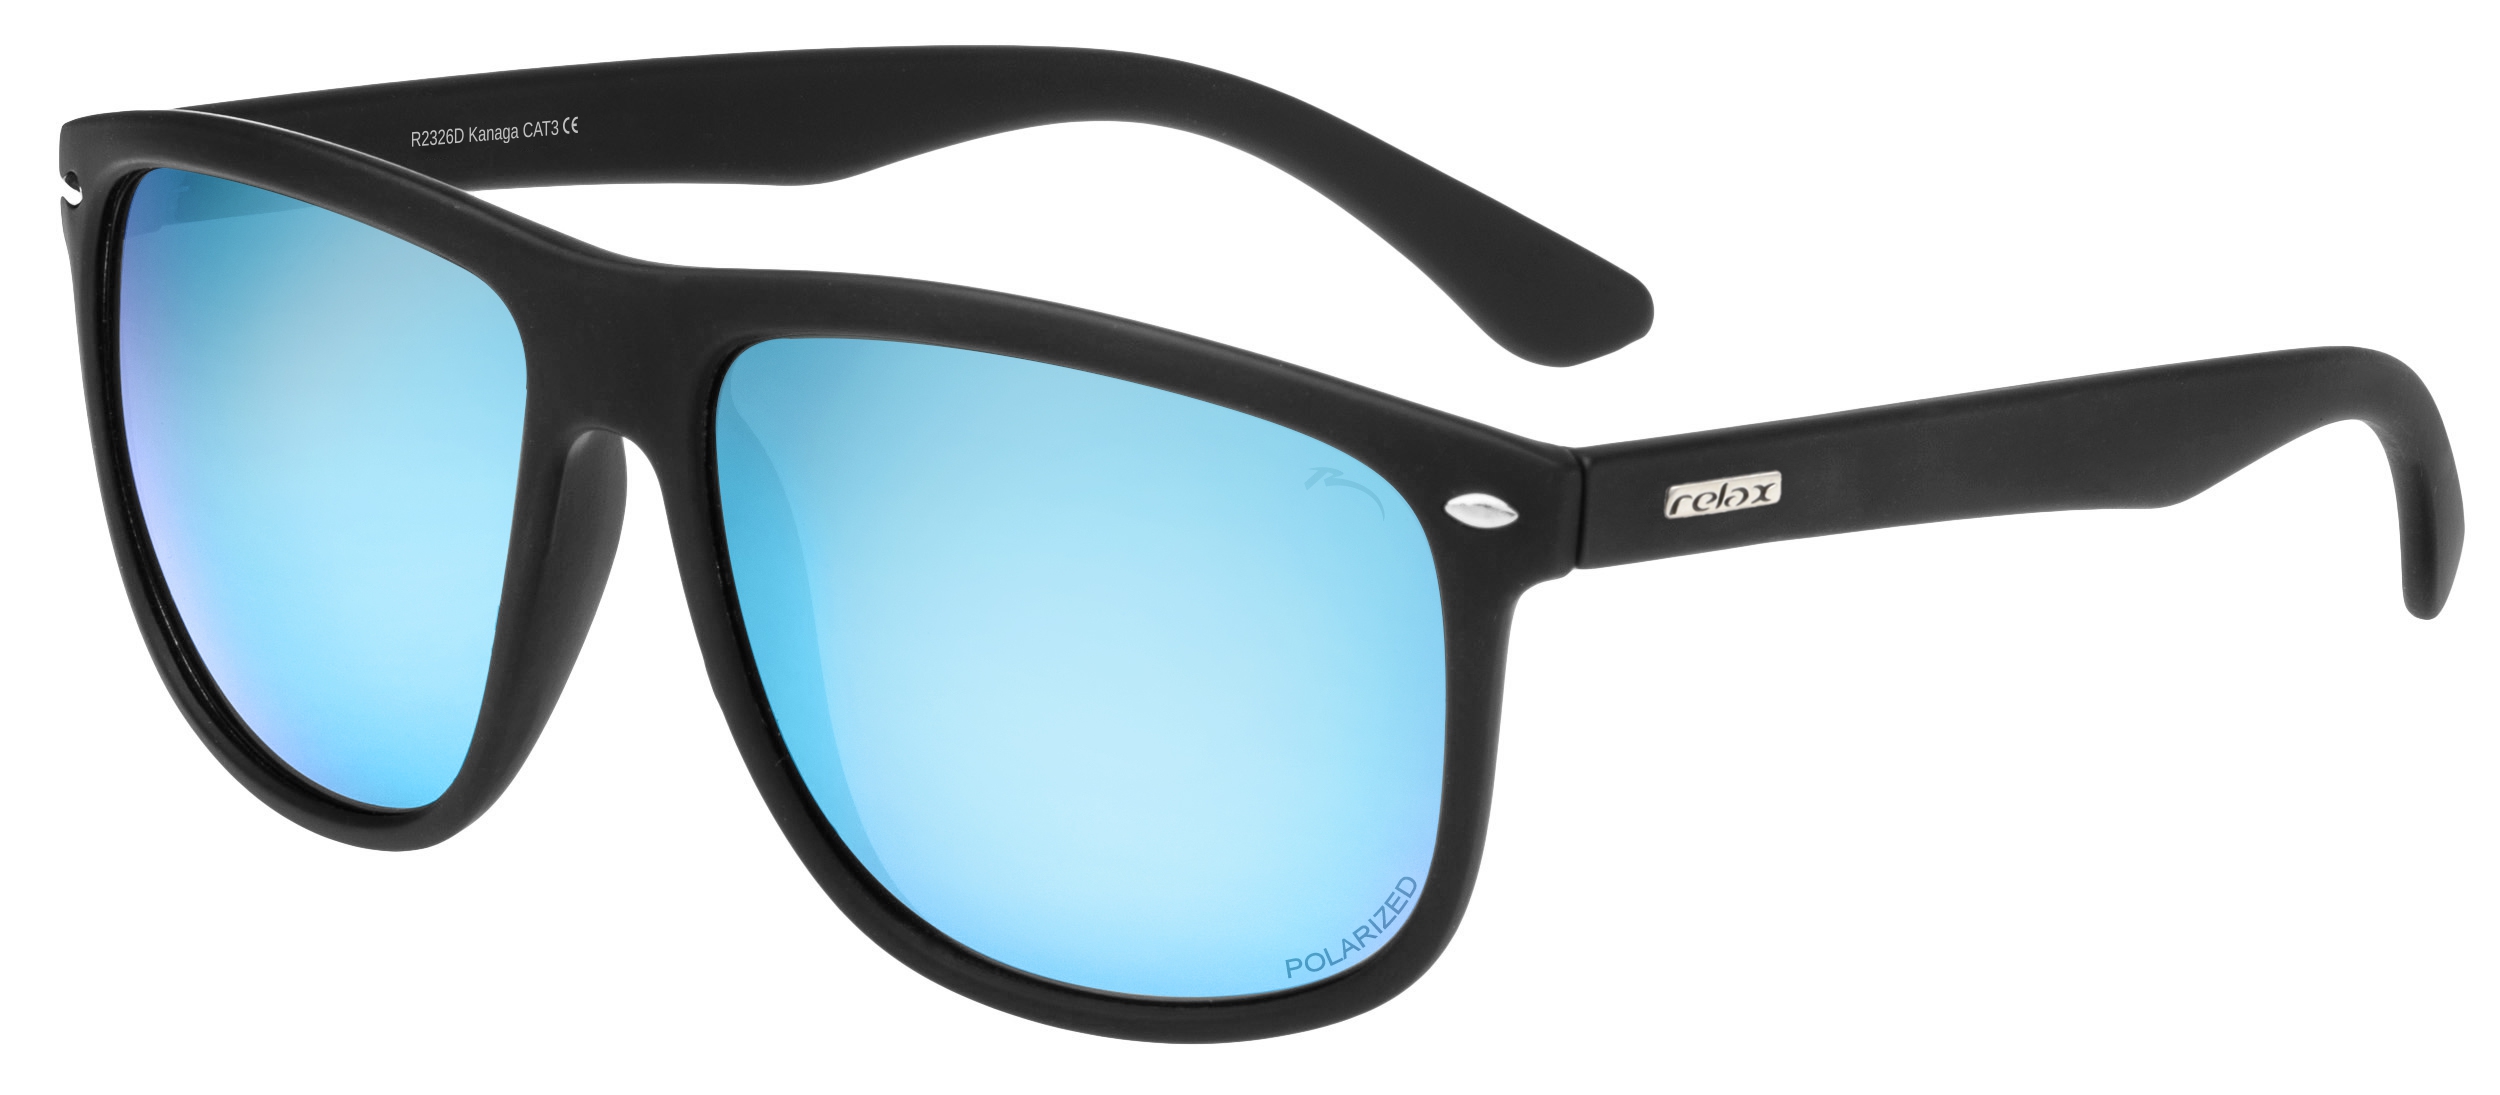 Polarized sunglasses  Relax Kanaga R2326D standard